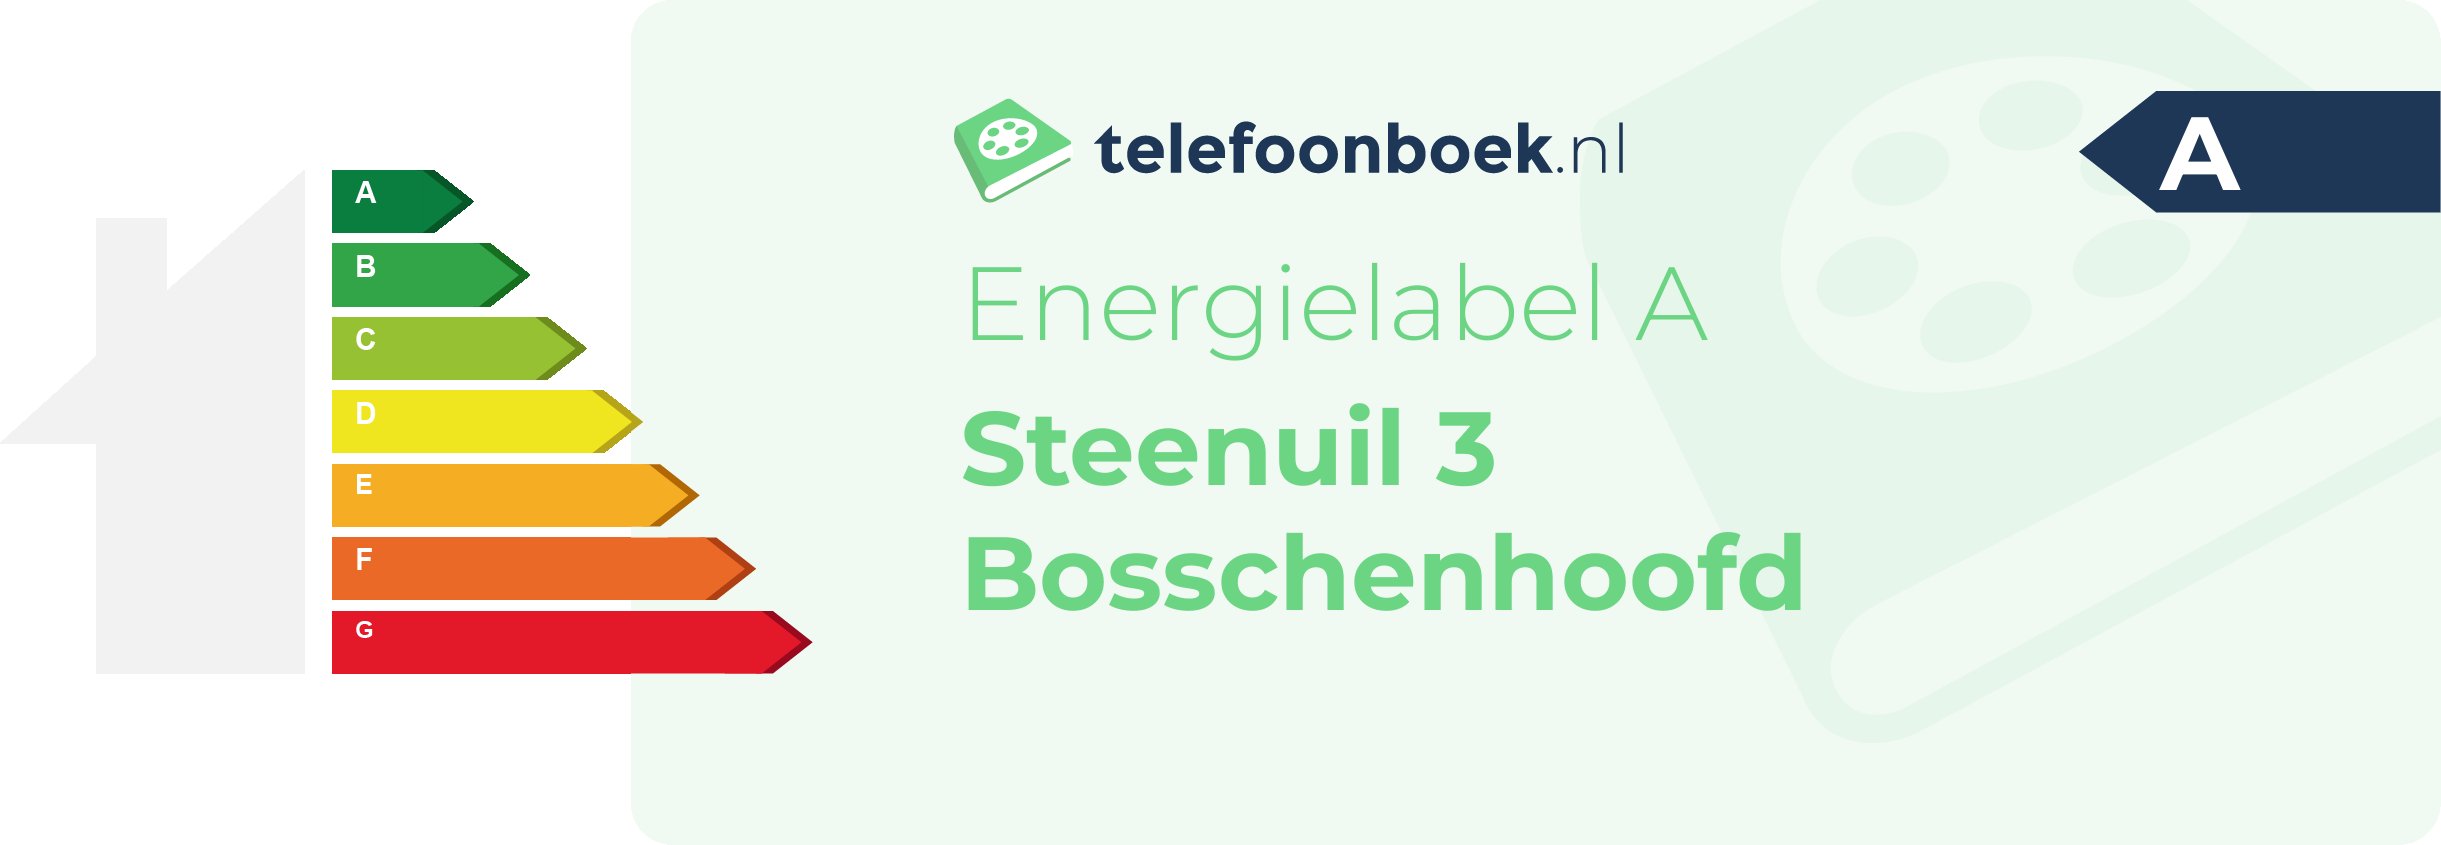 Energielabel Steenuil 3 Bosschenhoofd